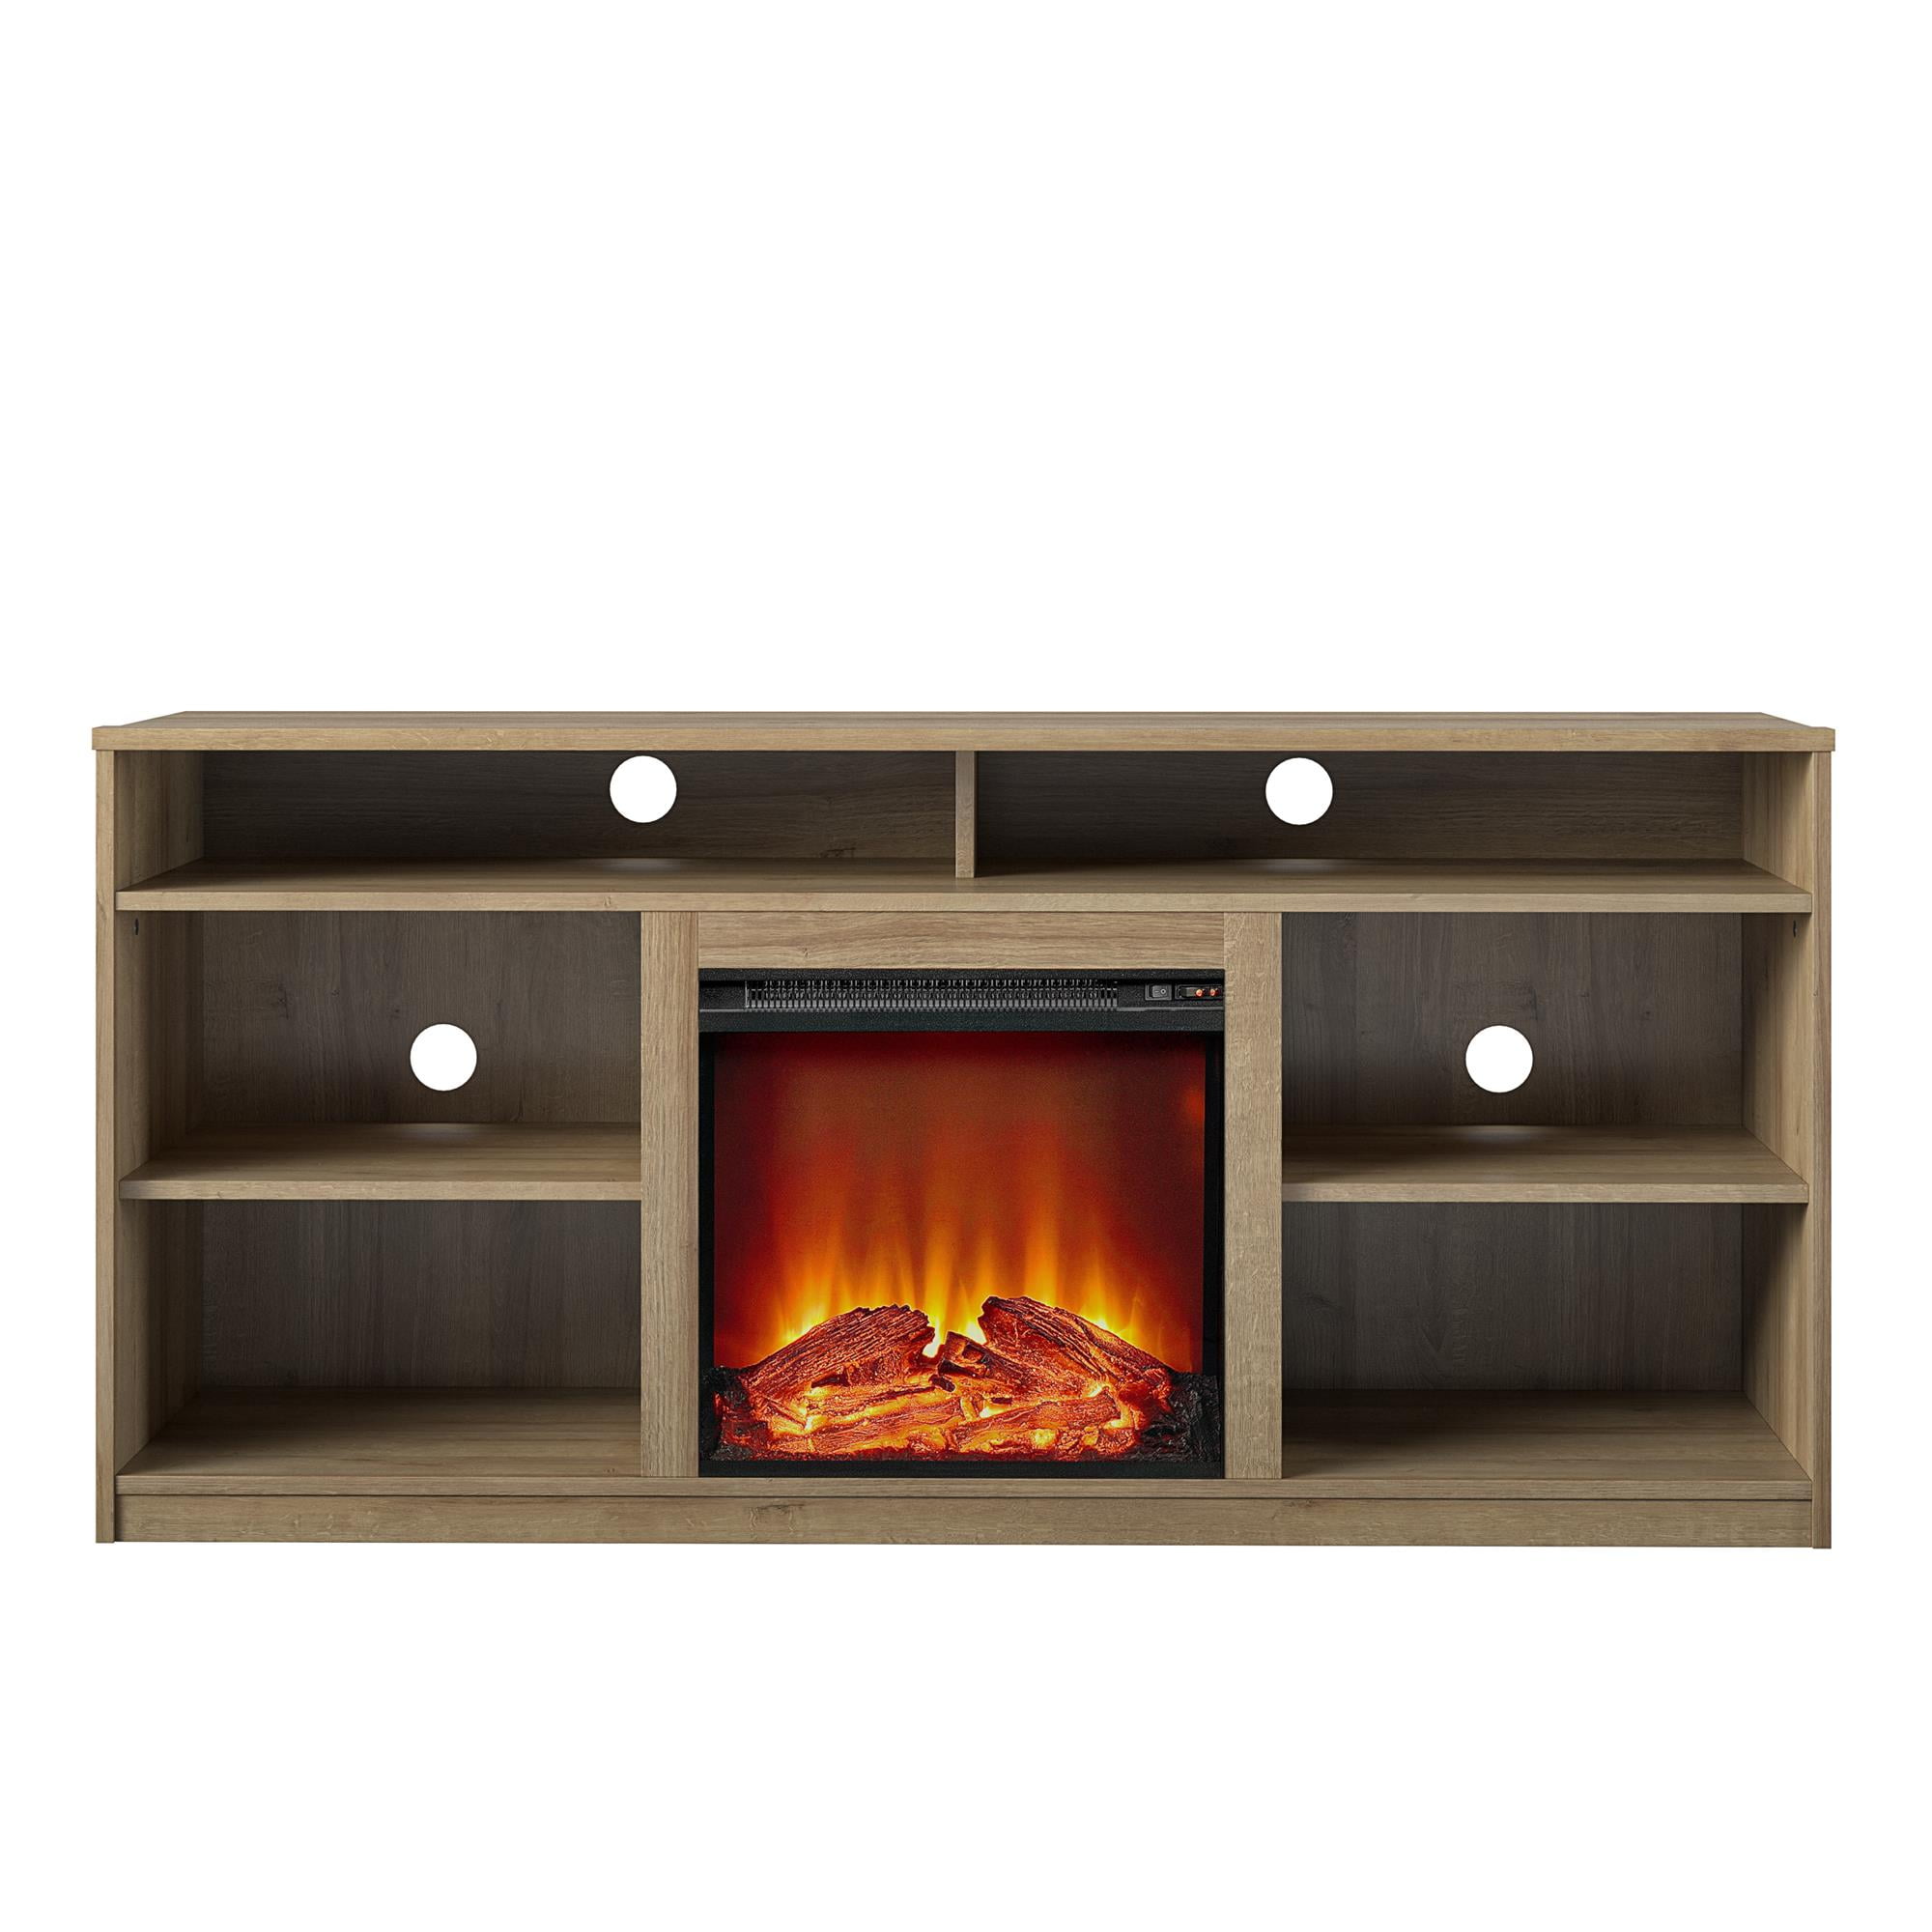 Mainstays Fireplace TV Stand for TVs up to 65" 8620335WCOM Black Oak for sale online 